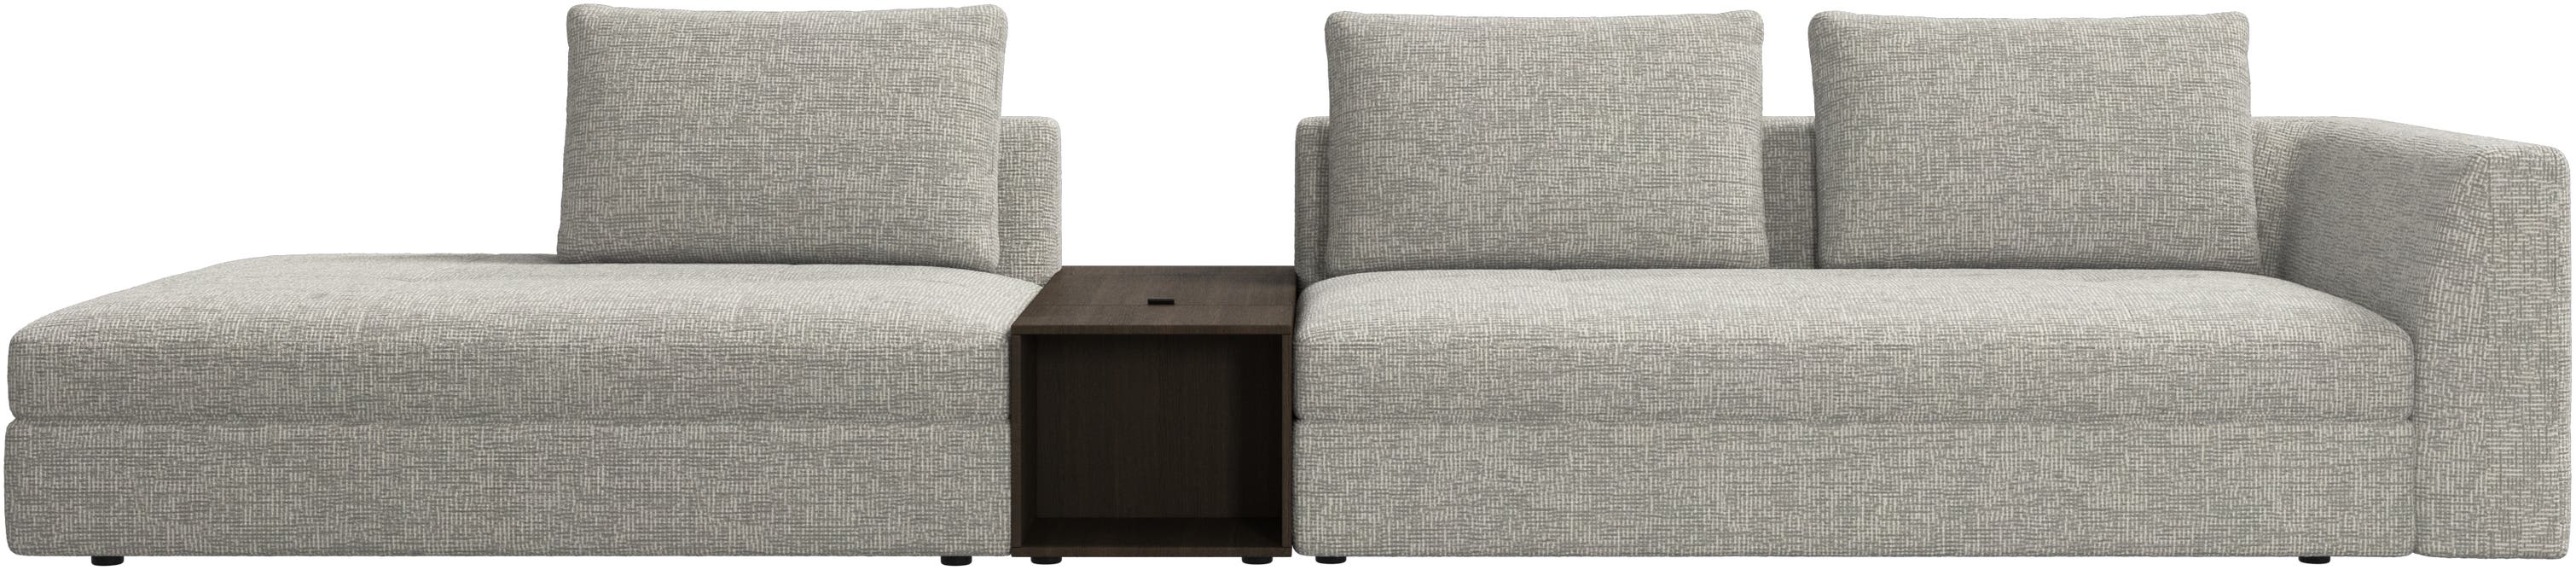 Bergamo 3 seater lounge sofa with storage